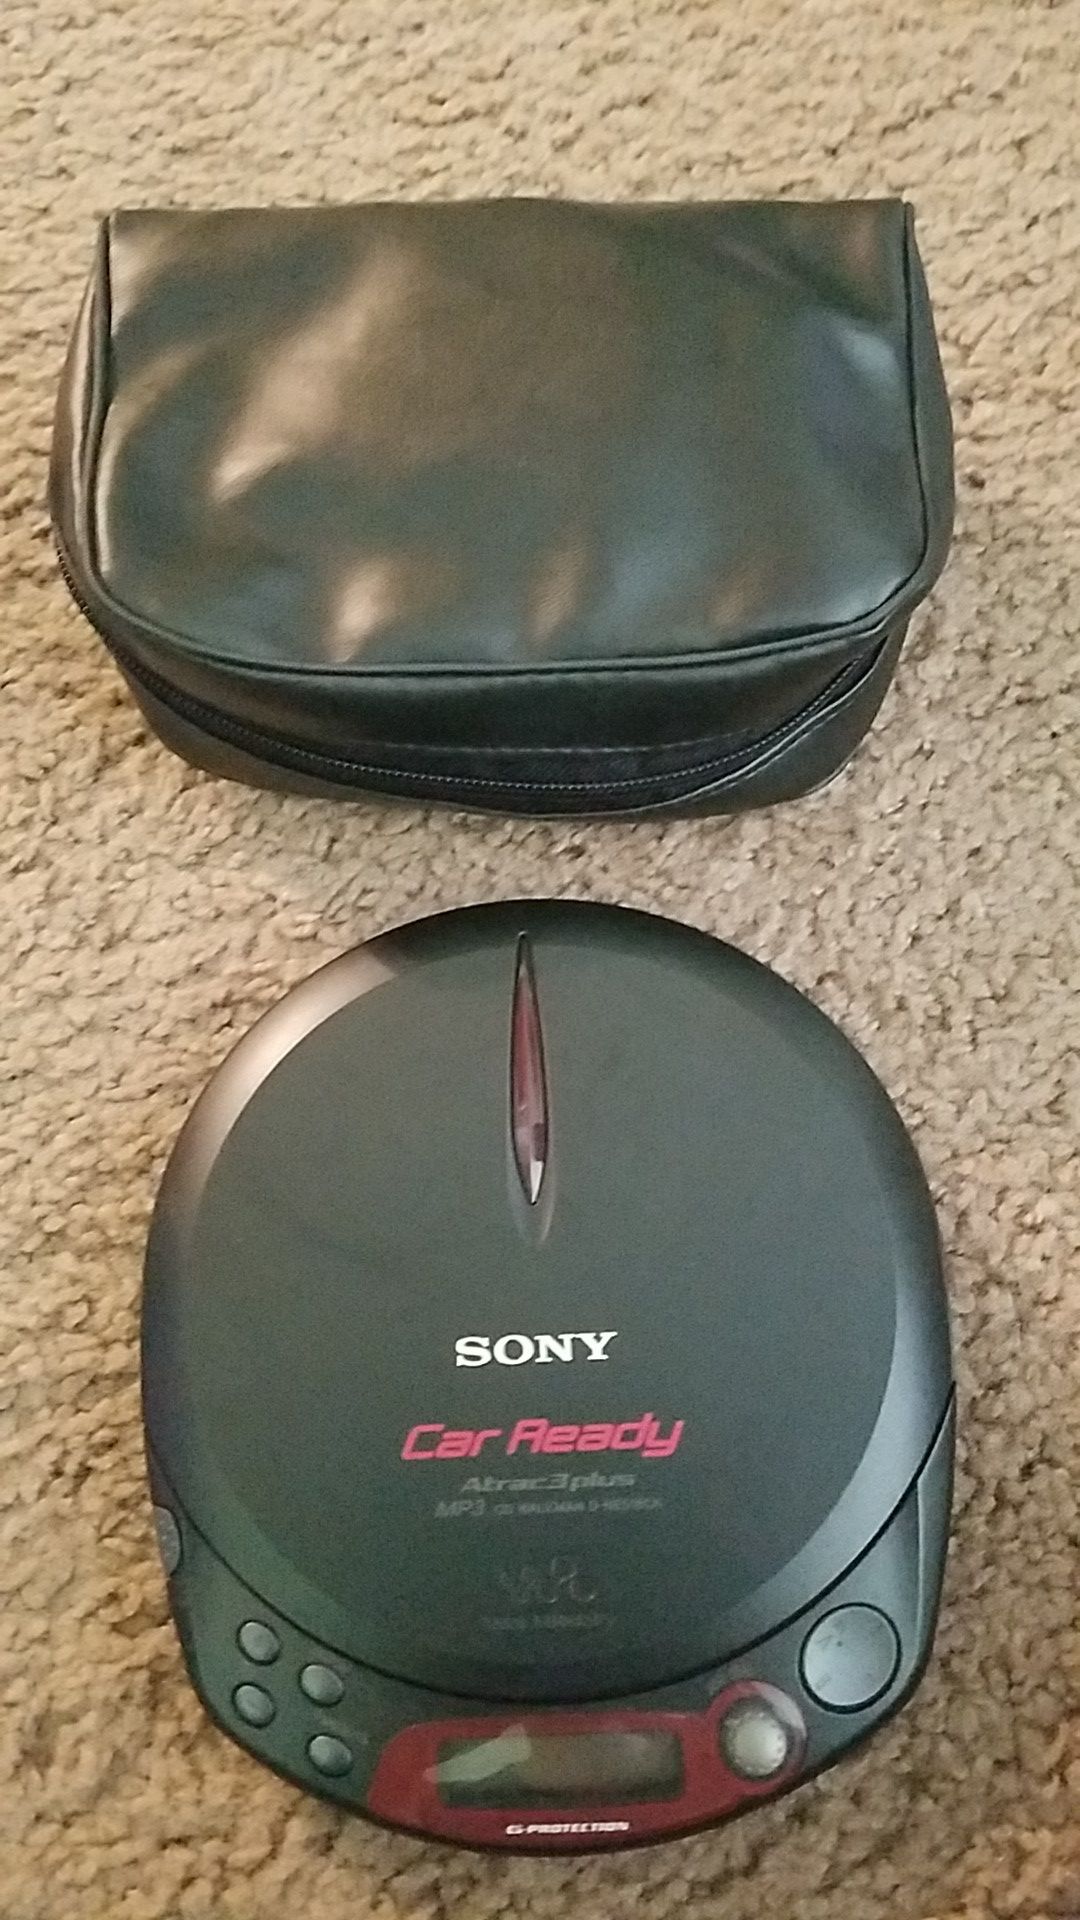 Sony car ready MP3/CD walkman